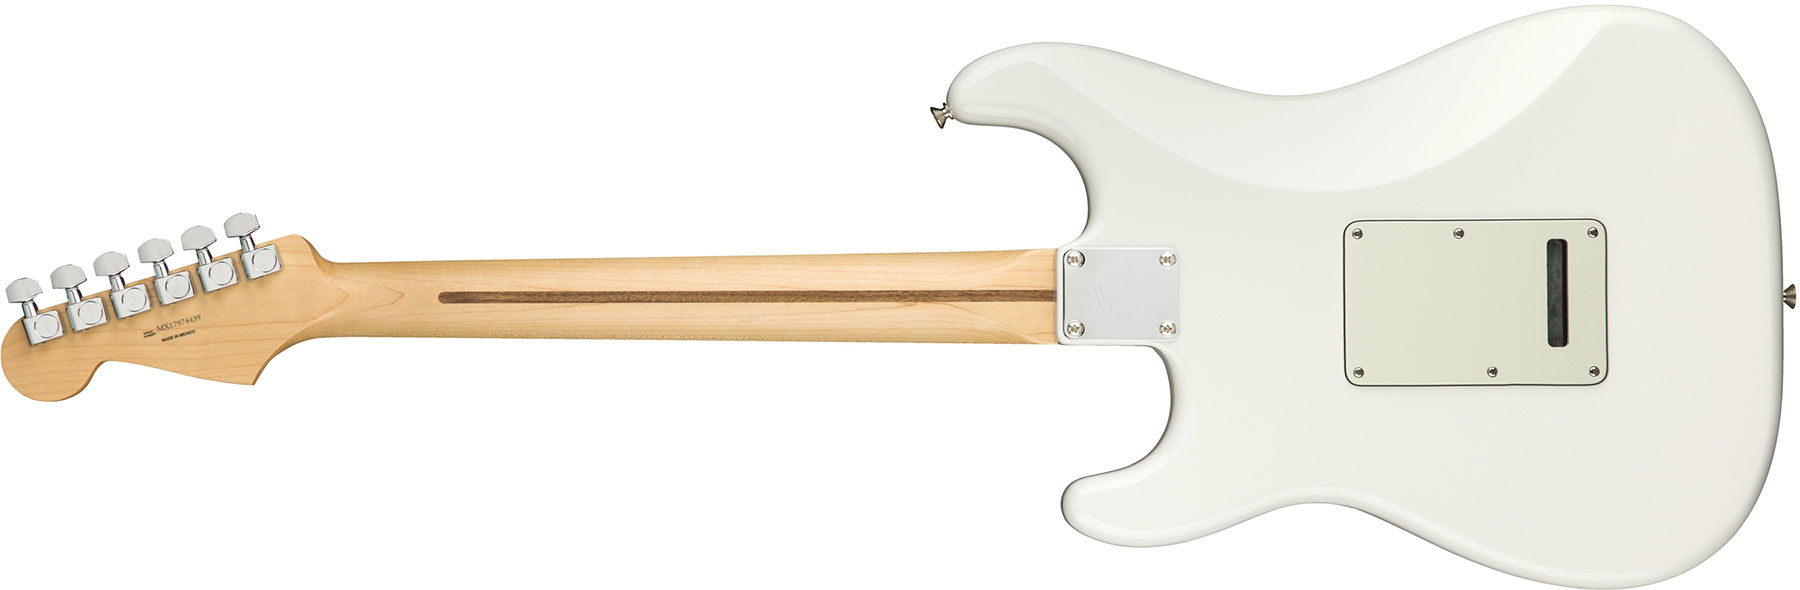 Fender Strat Player Mex Sss Pf - Polar White - Str shape electric guitar - Variation 1